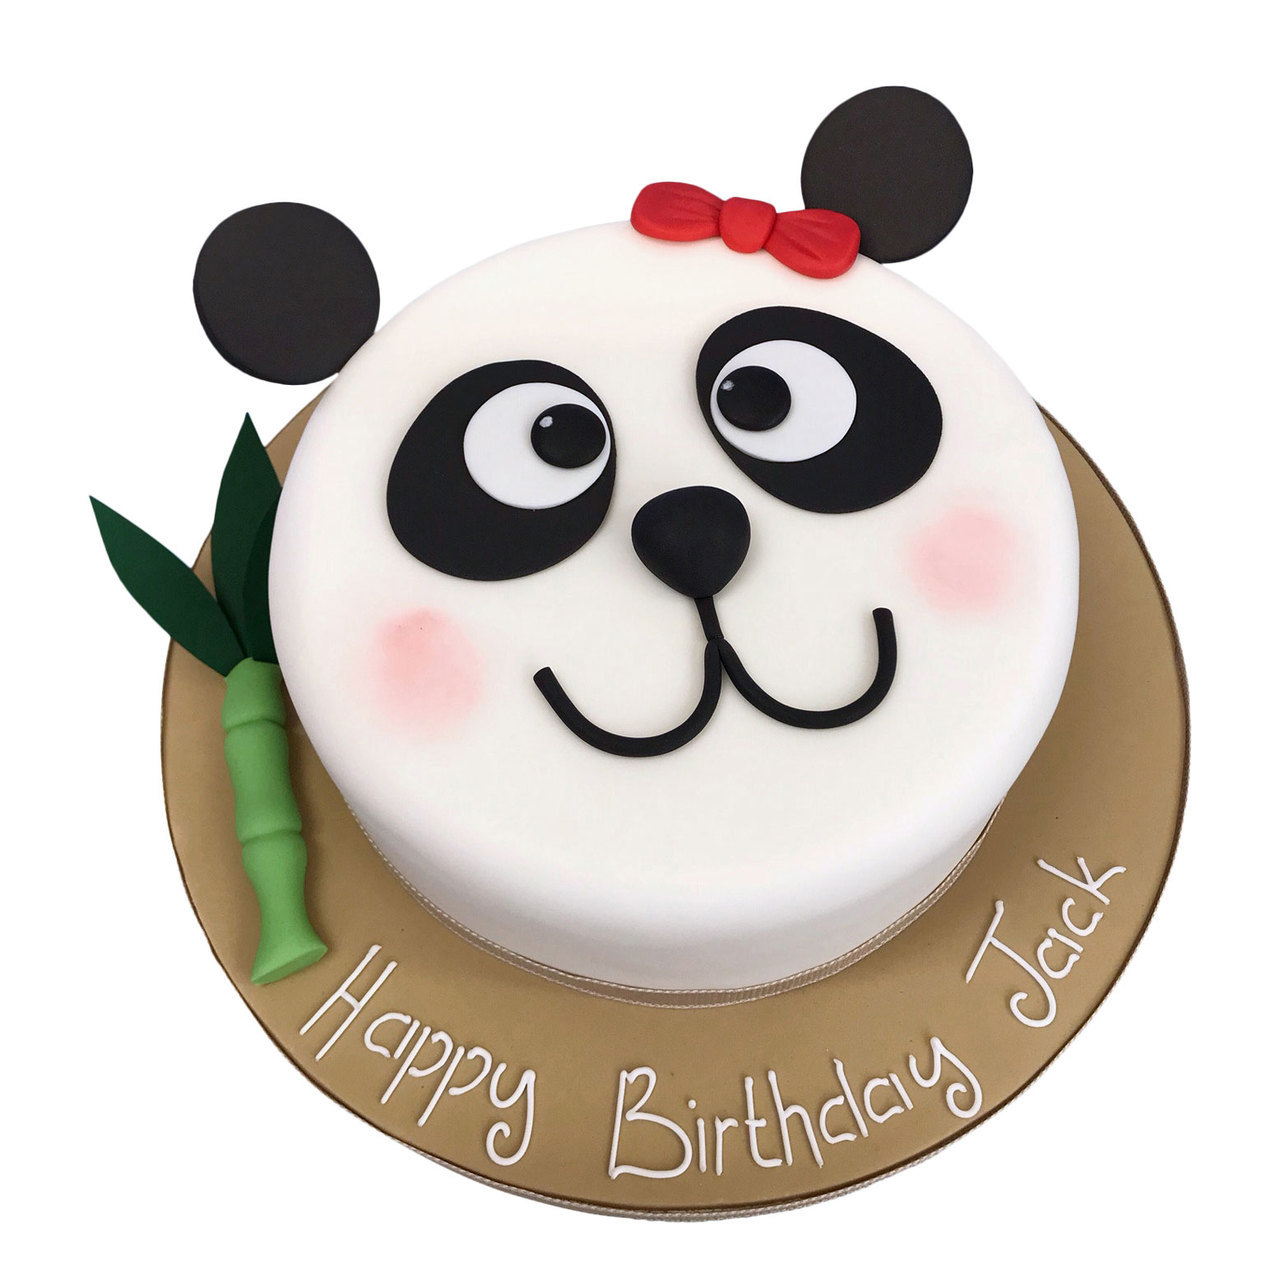 Panda Party Fondant Cake Delivery in Delhi NCR - ₹1,649.00 Cake ...